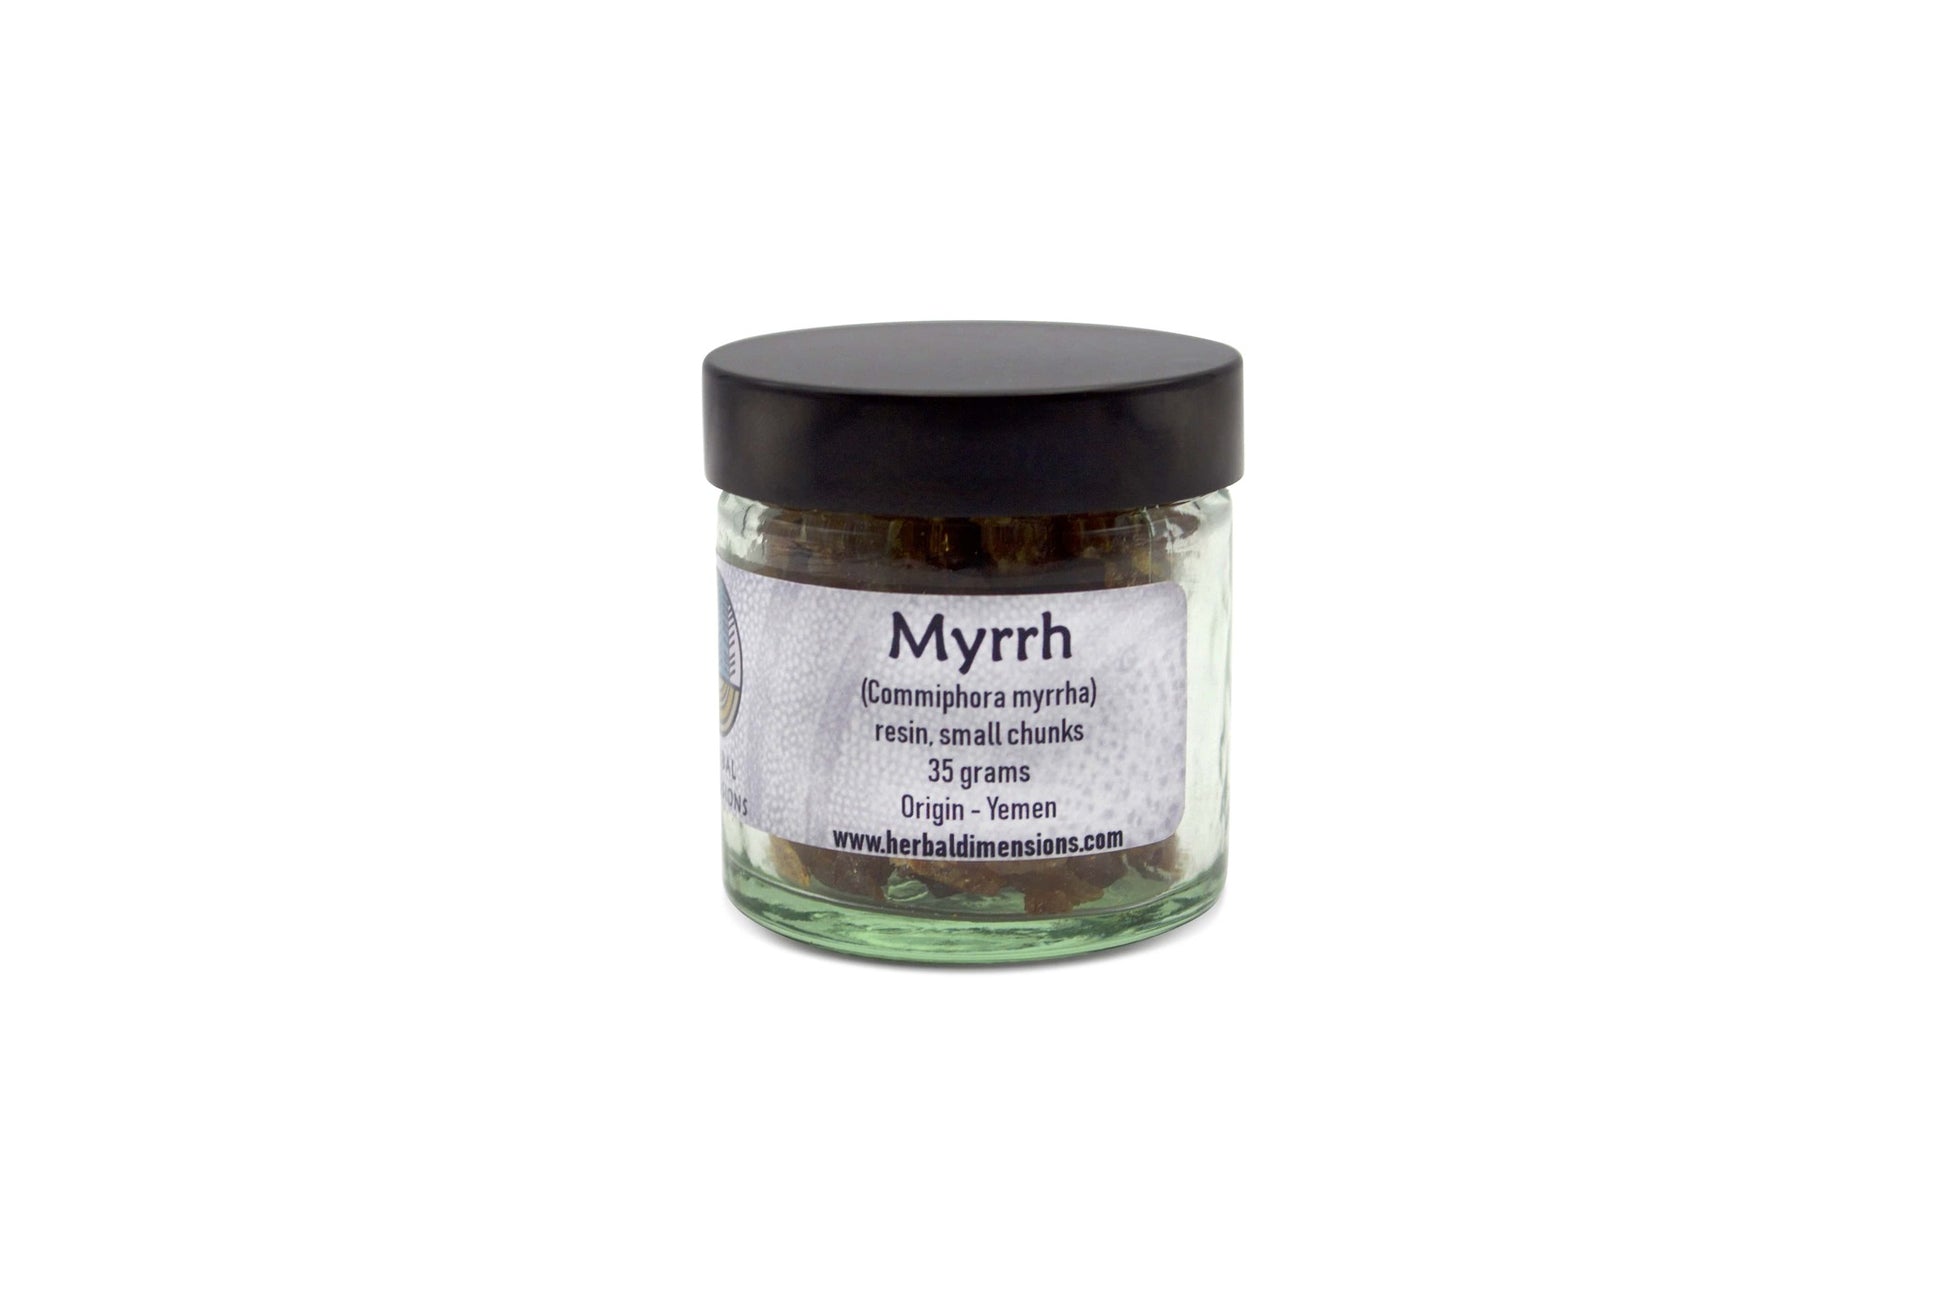 Myrrh in a glass jar